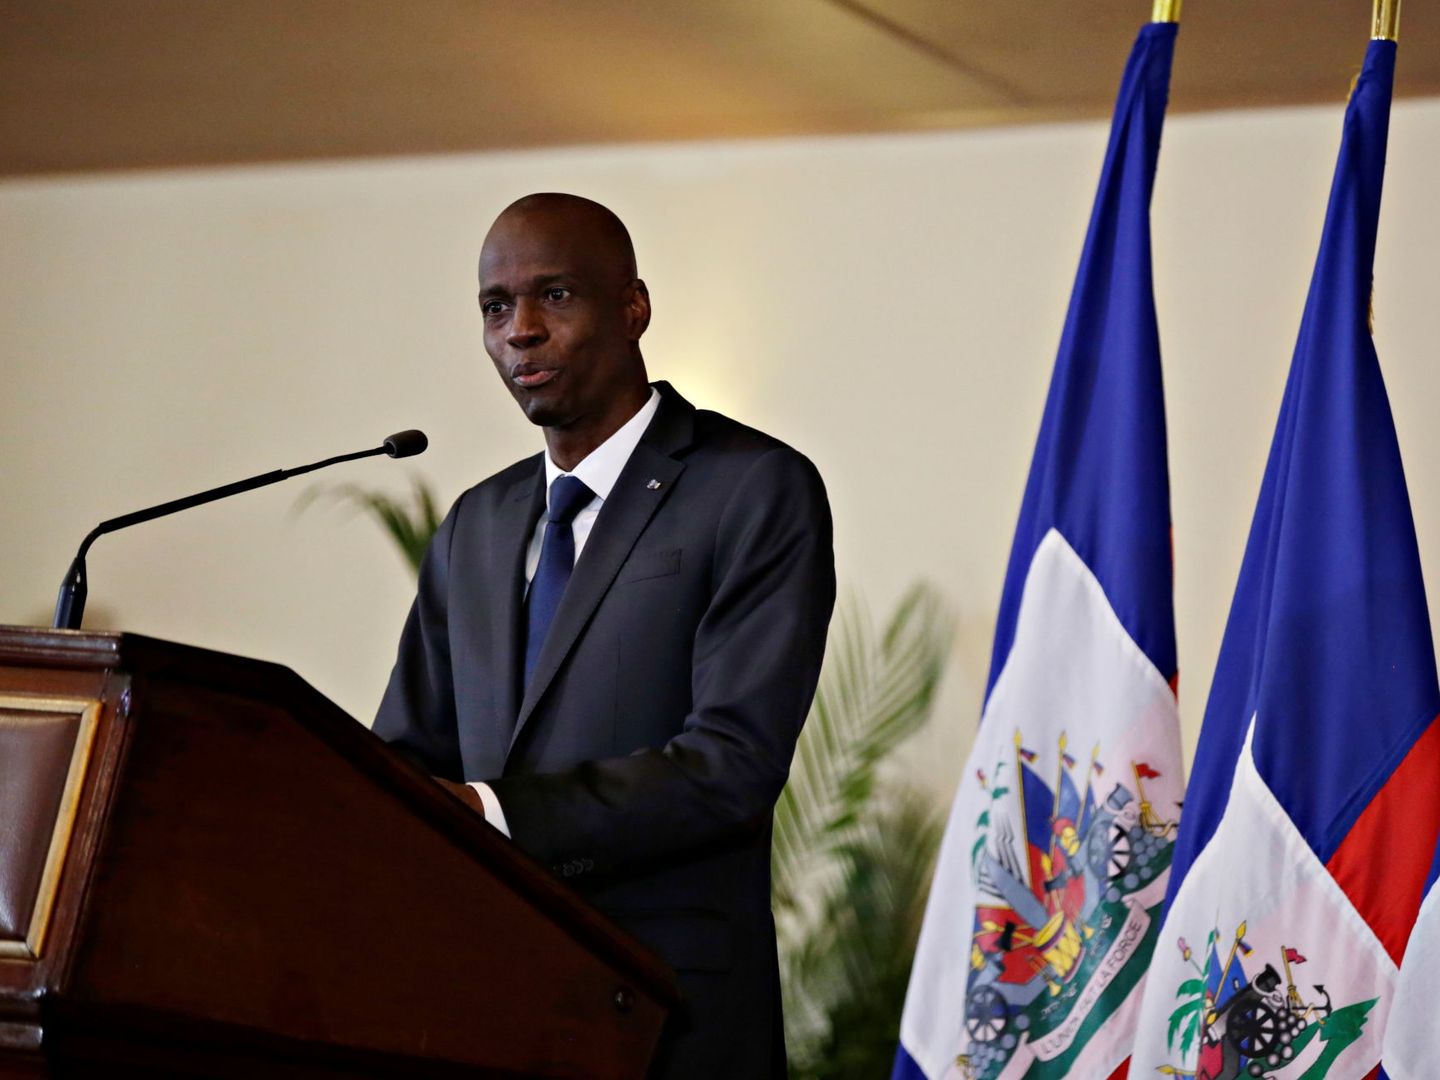 El presidente de Haití, Jovenel Moïse. (Foto: Reuters)